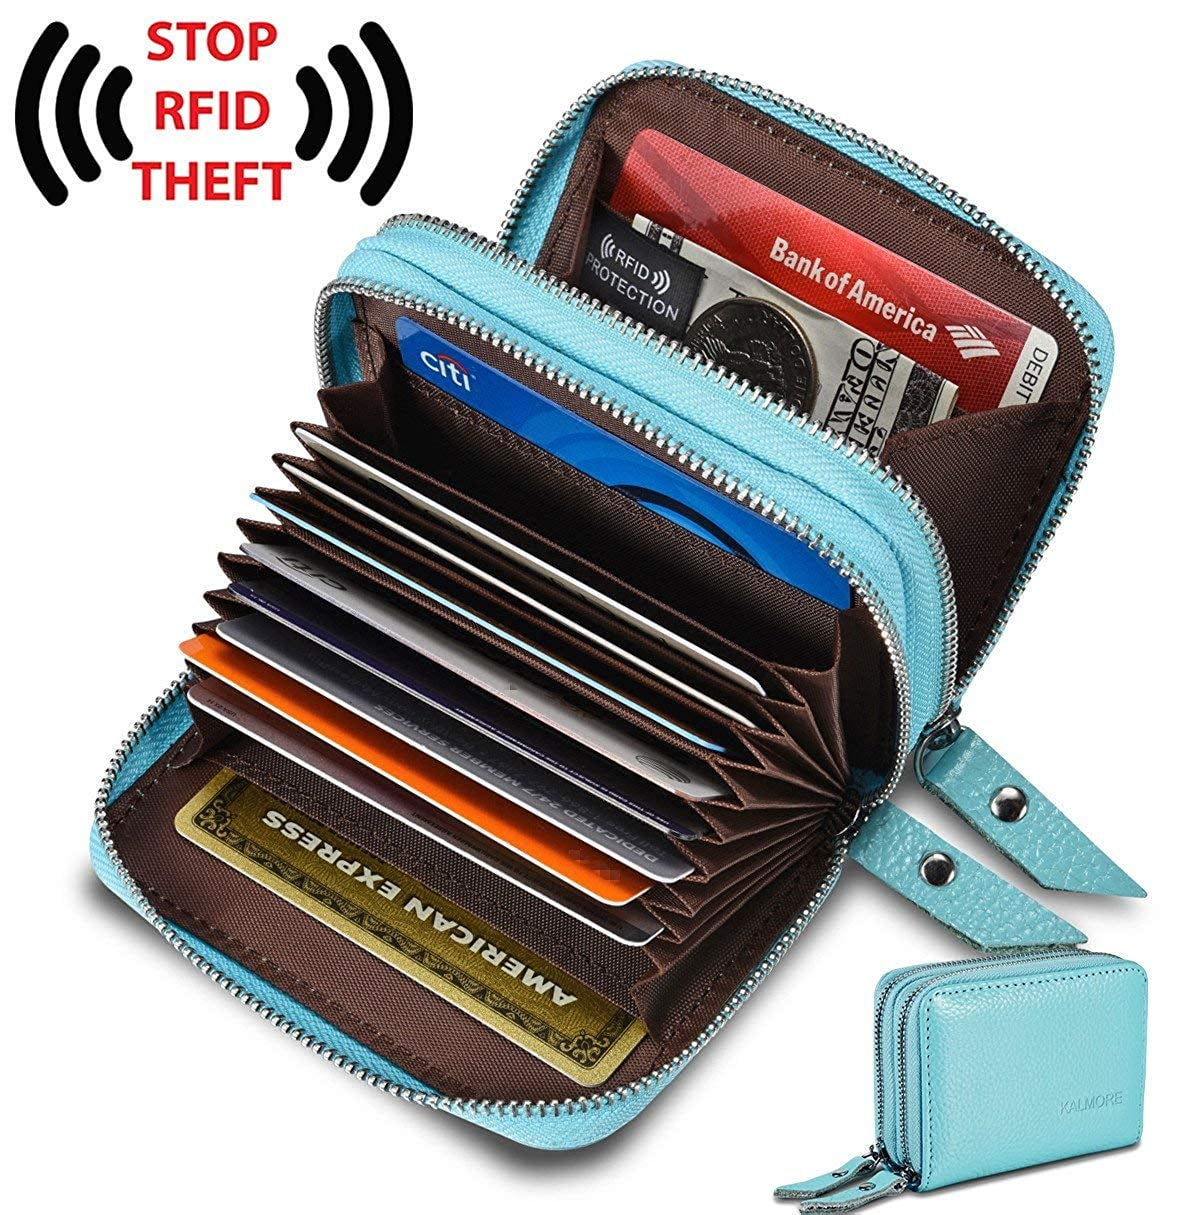 YALUXE Womens Leather Wristlet Phone Purse Crossbody Clutch Wallet 8 Card Slots RFID Blocking Zipper Coin Pocket Removable Shoulder Strap Blue 